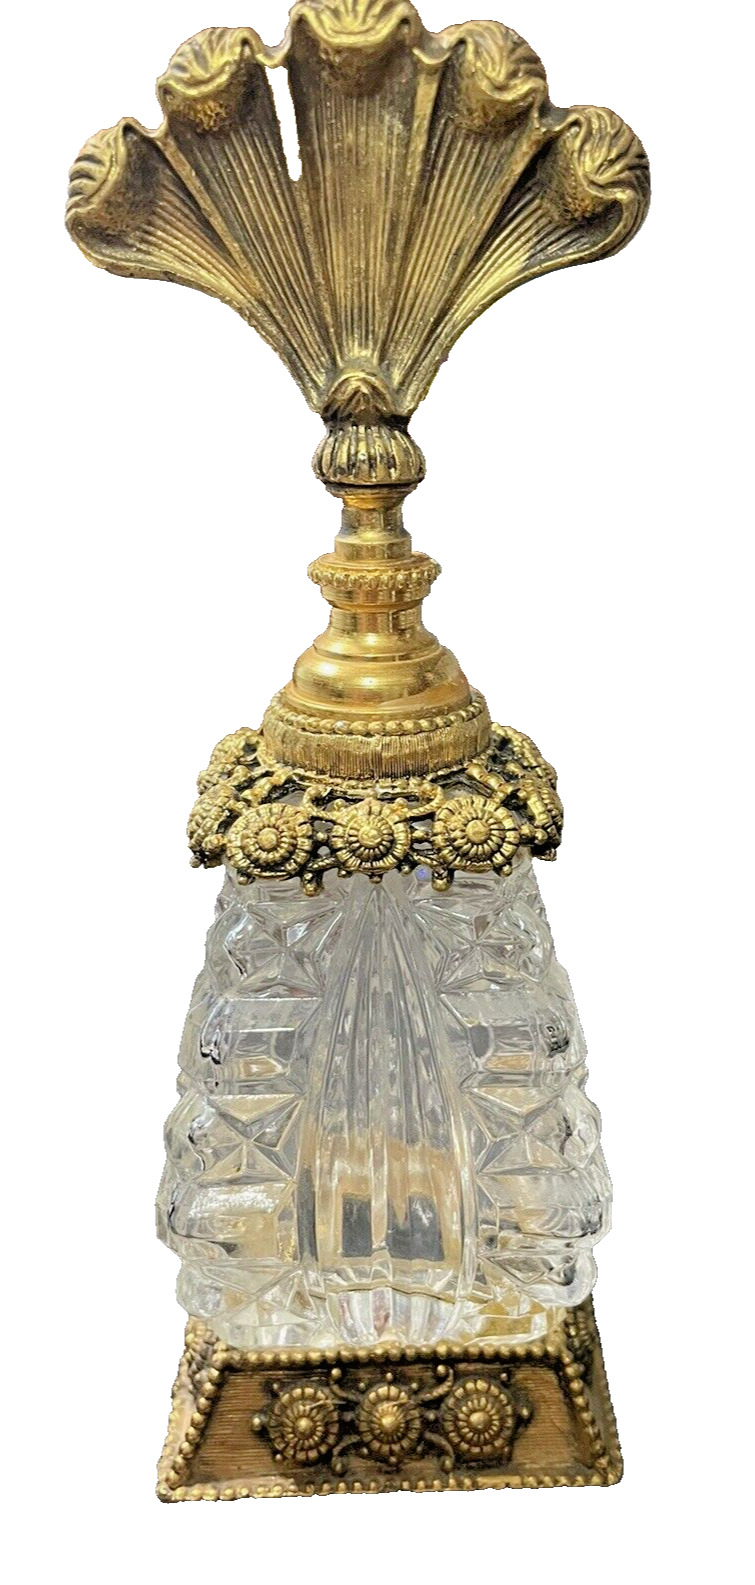 Vintage Perfume Bottle, Crystal with Ornate Gold Trim on Stopper & Bottle